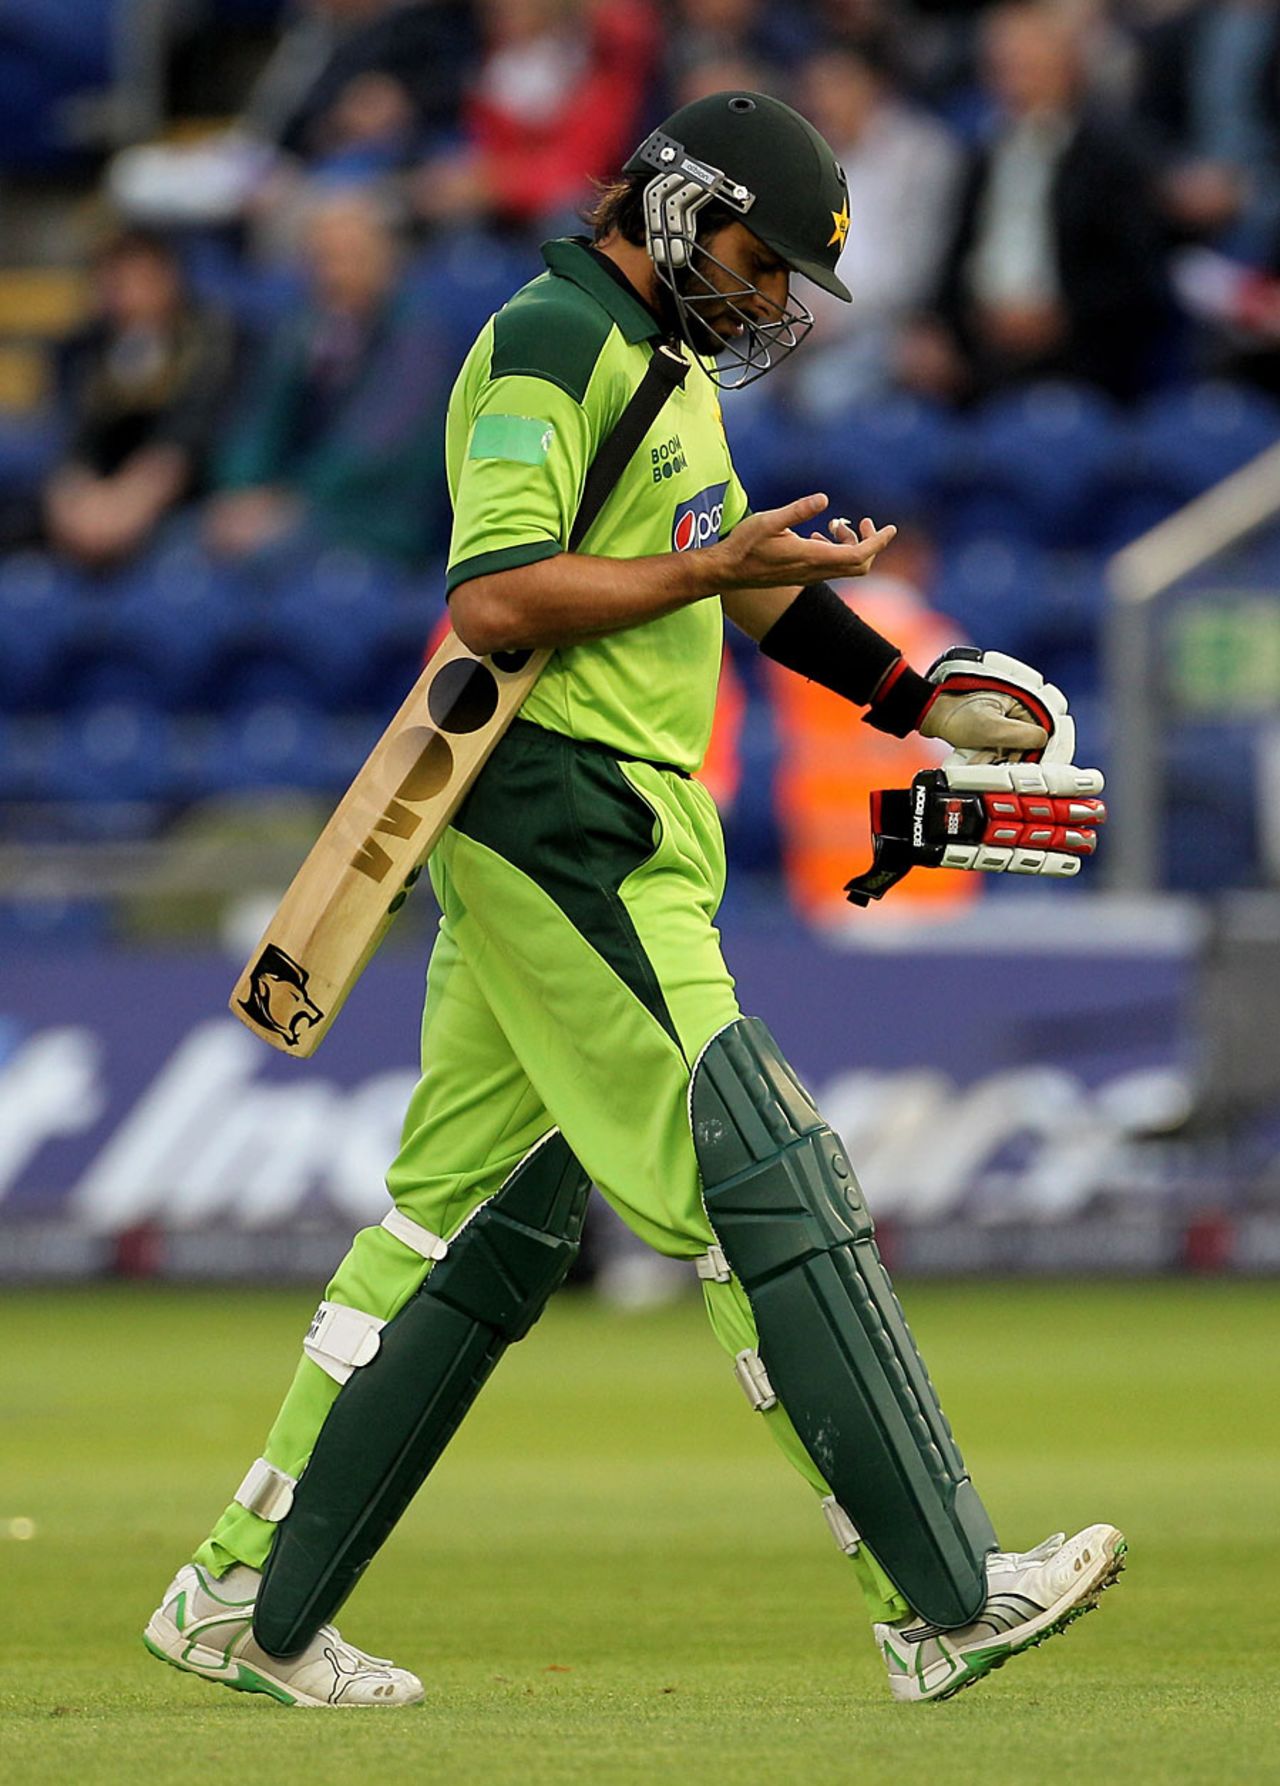 Shahid Afridi could do nothing to halt the slide as Pakistan's batsmen crumbled, England v Pakistan, 2nd T20I, Cardiff, September 7, 2010